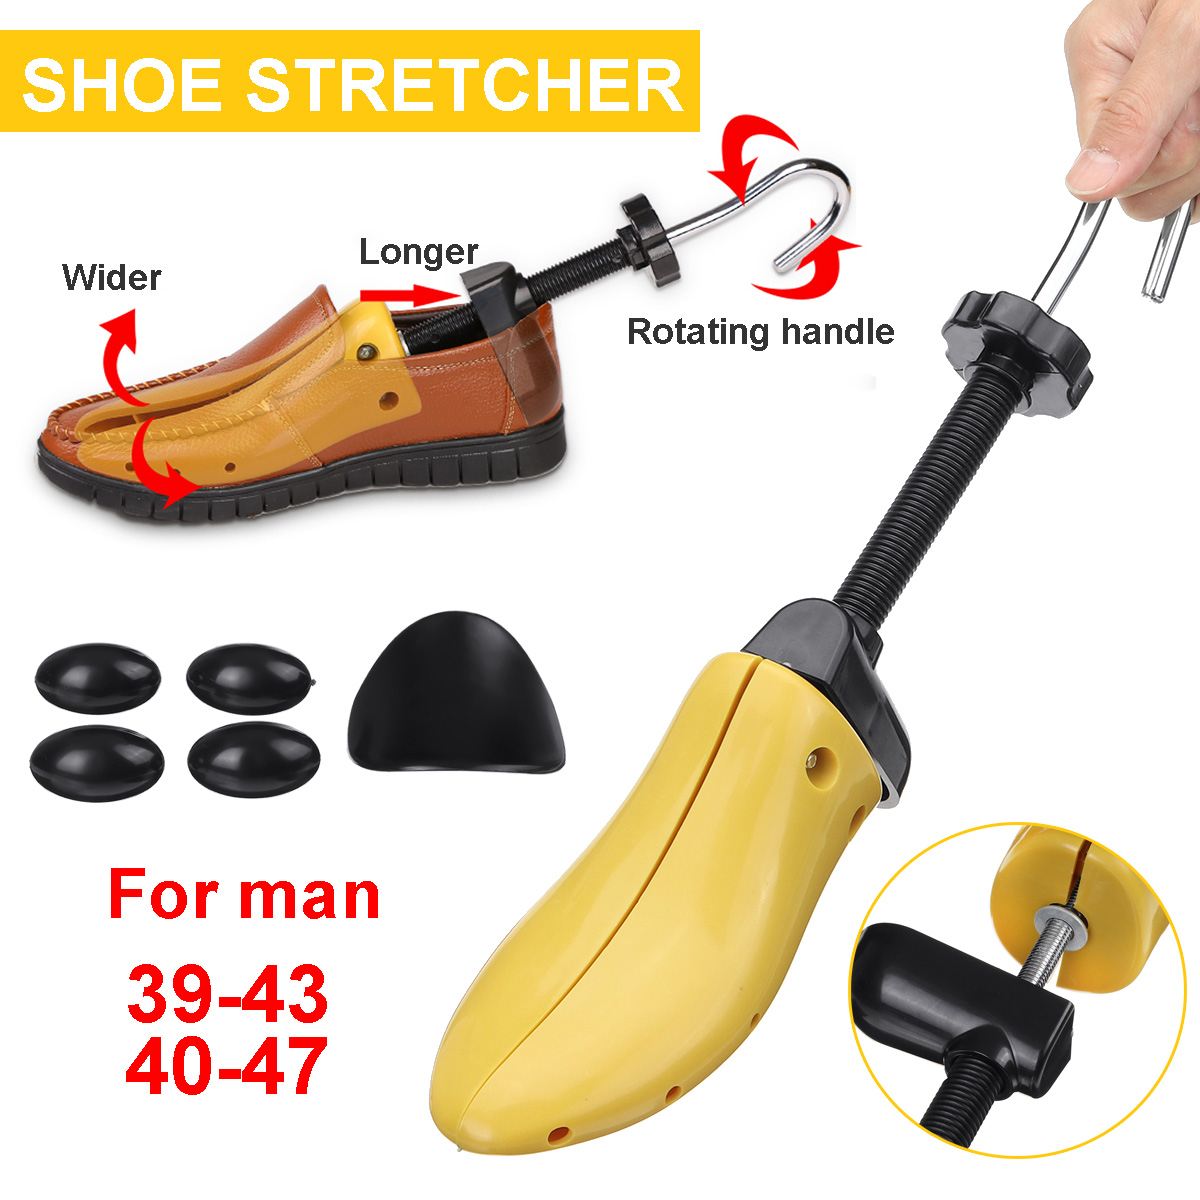 BSAID Unisex 1pc Shoe Stretcher Wooden Shoes Tree Shaper Rack Wood Adjustable Flats Pumps Boots Expander Trees Size S/L 39-47